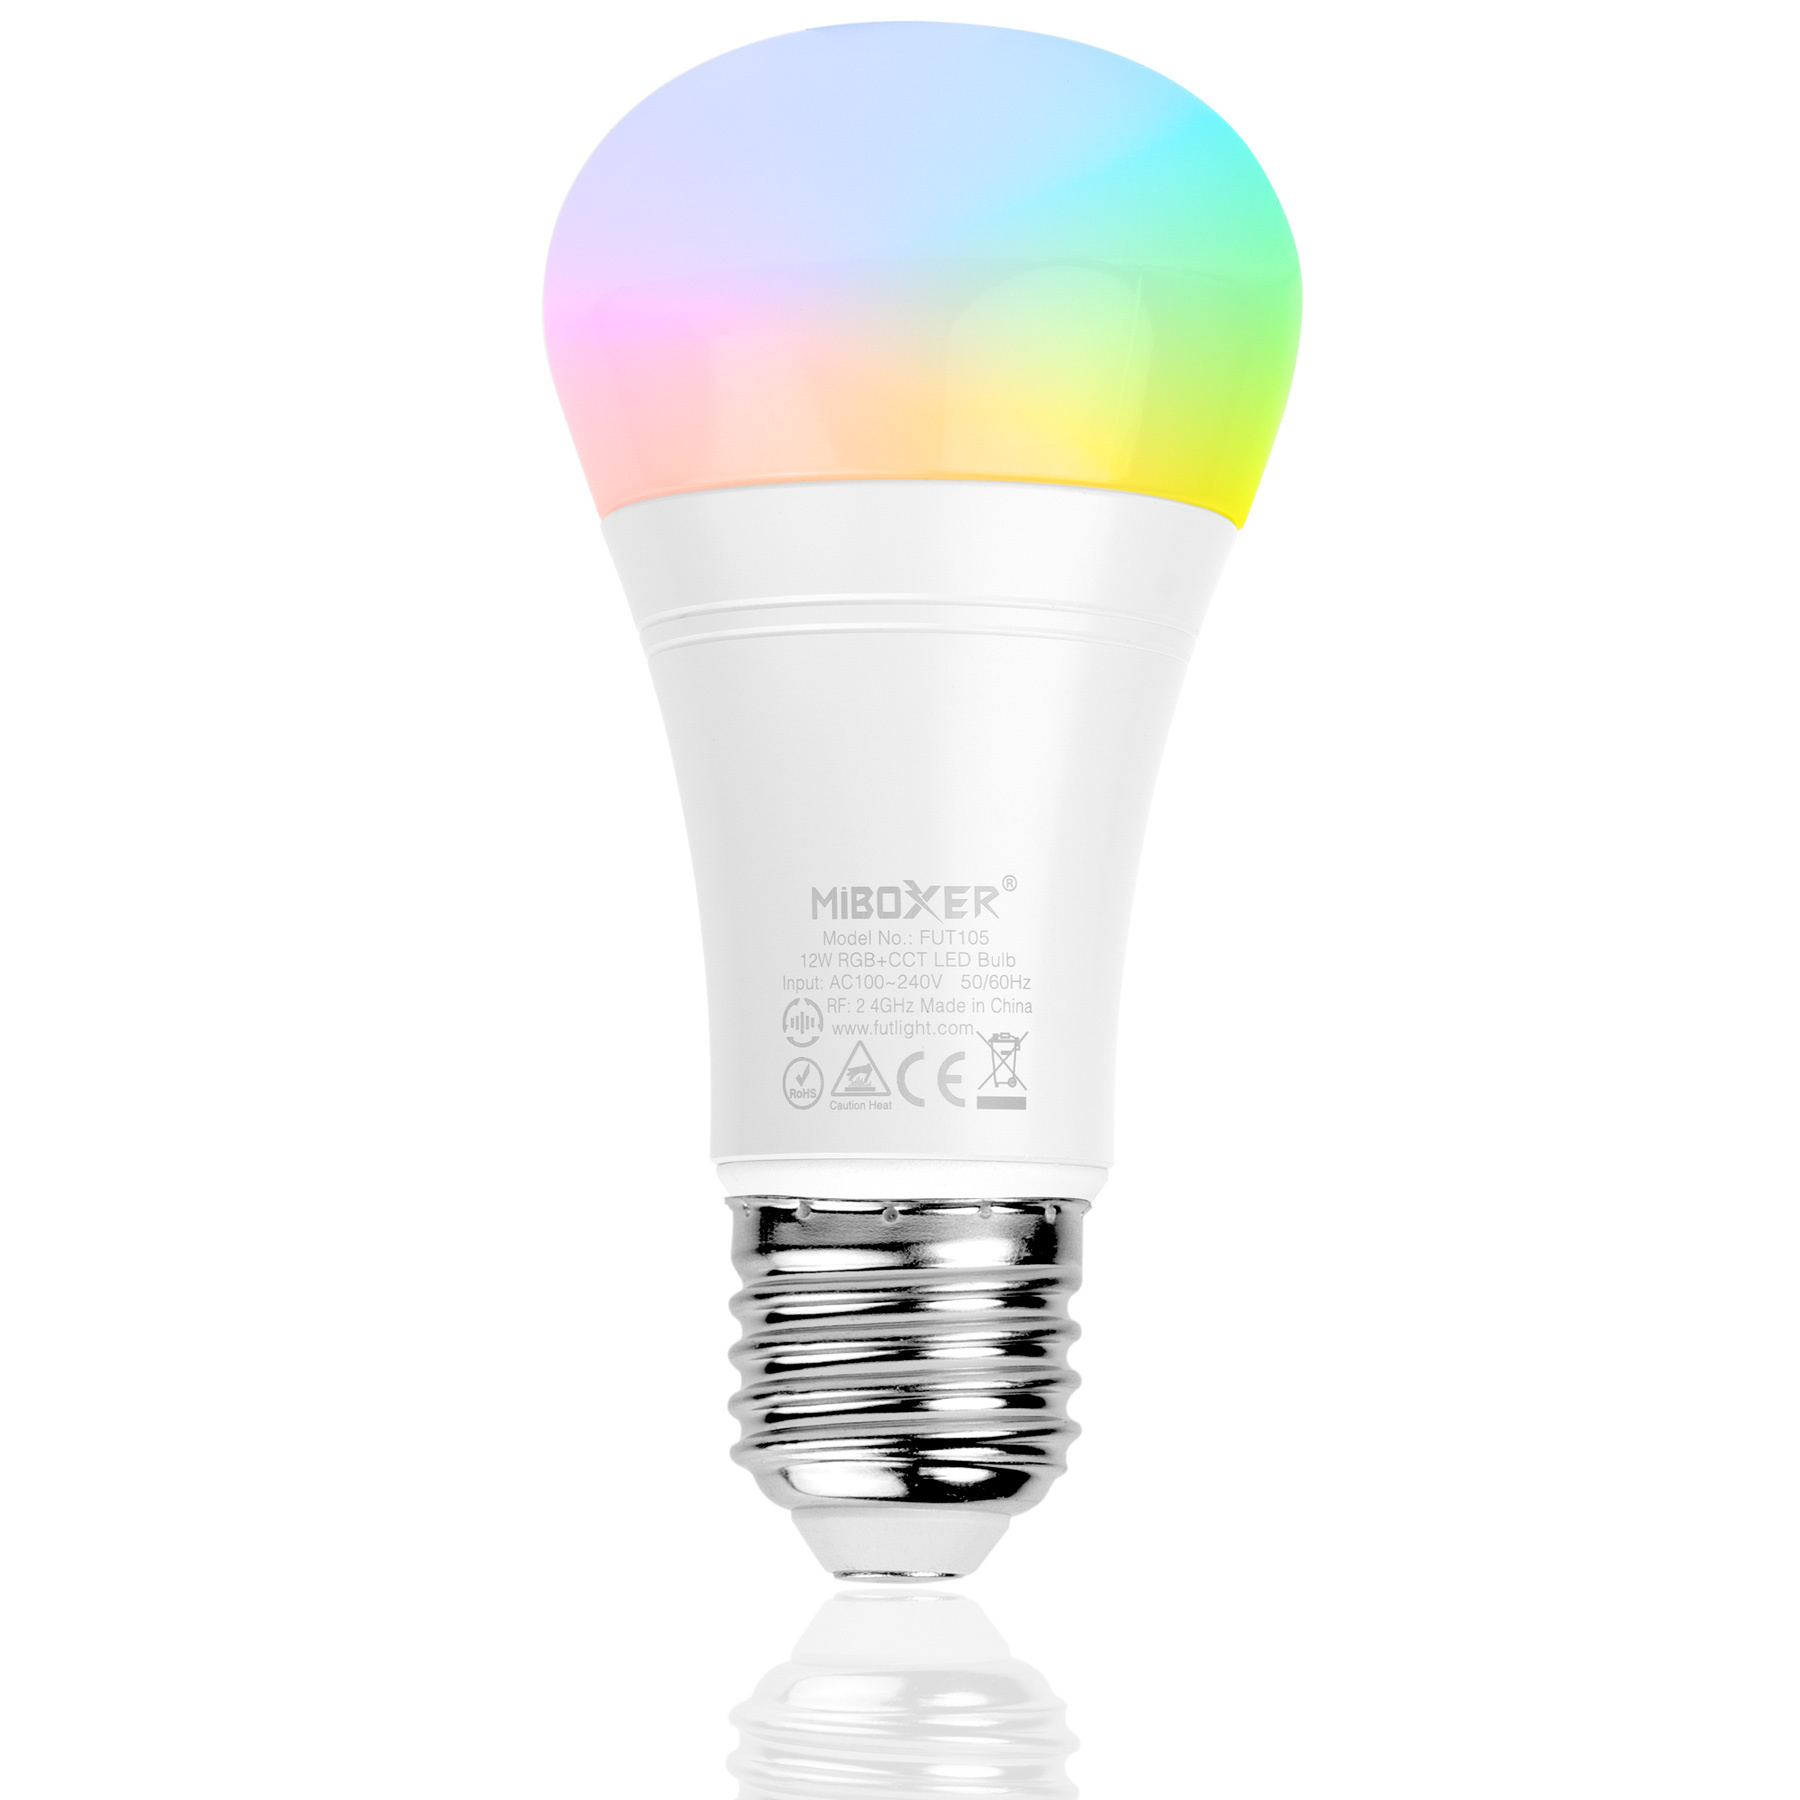 Duiker naar voren gebracht pint LED Lamp E27 - RGBWW / RGB+CCT - 12W - LED24